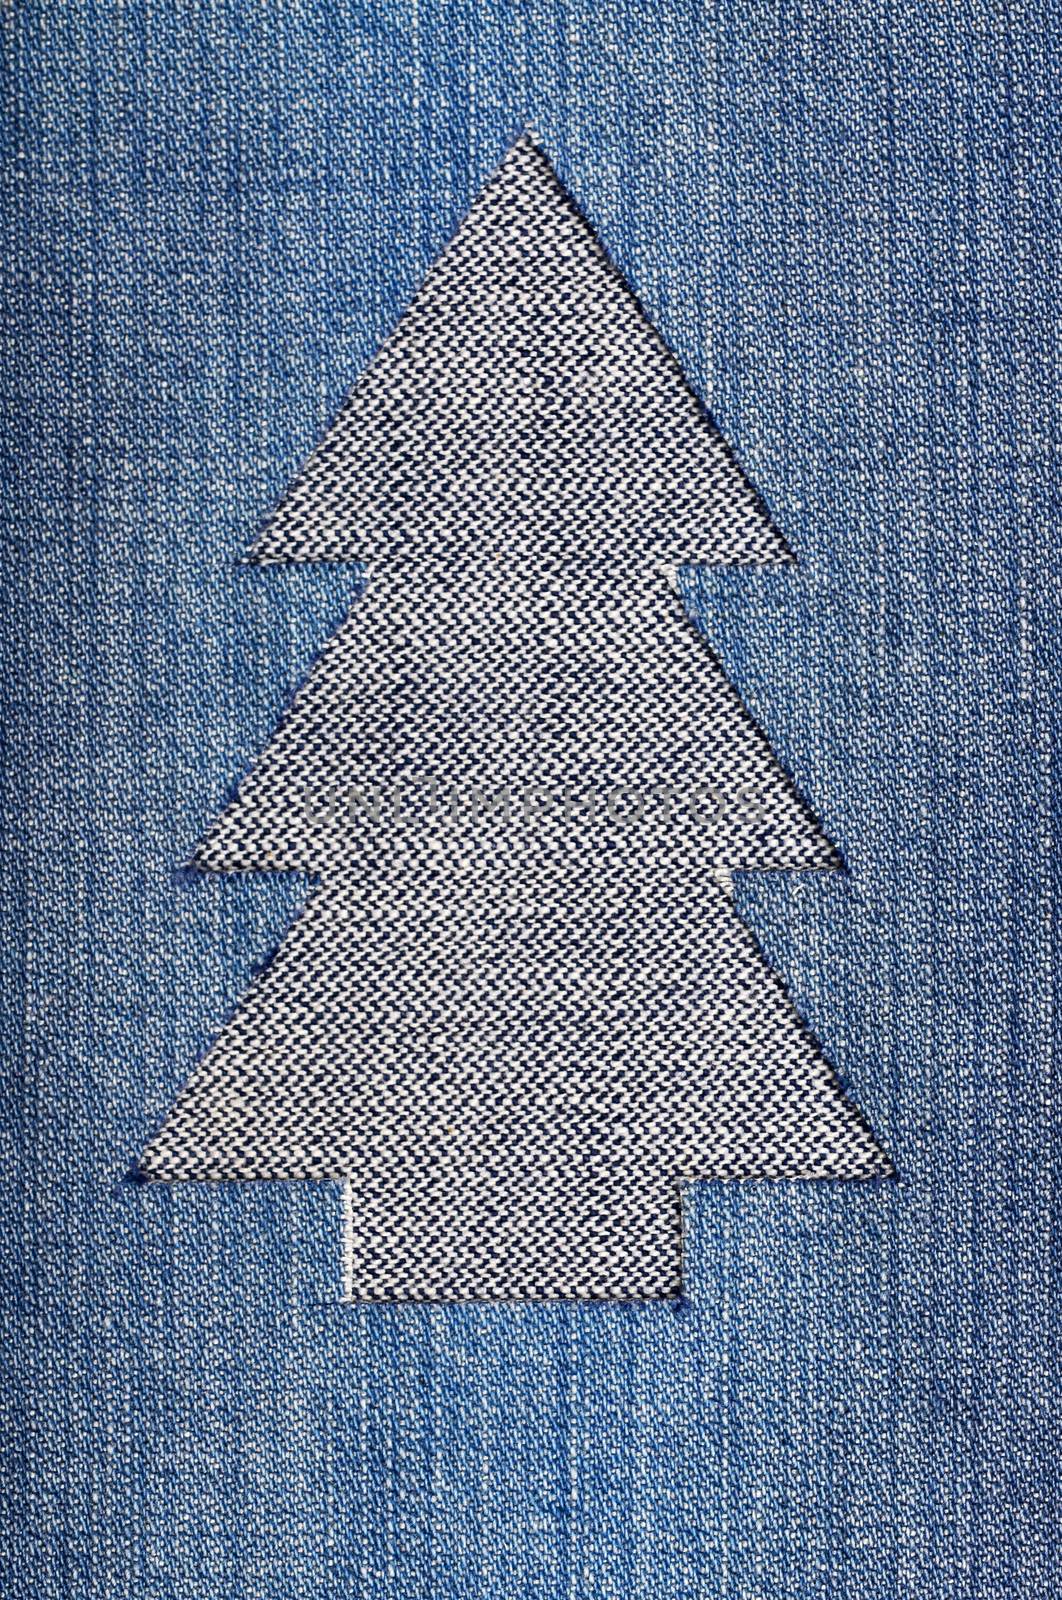 Christmas tree from denim